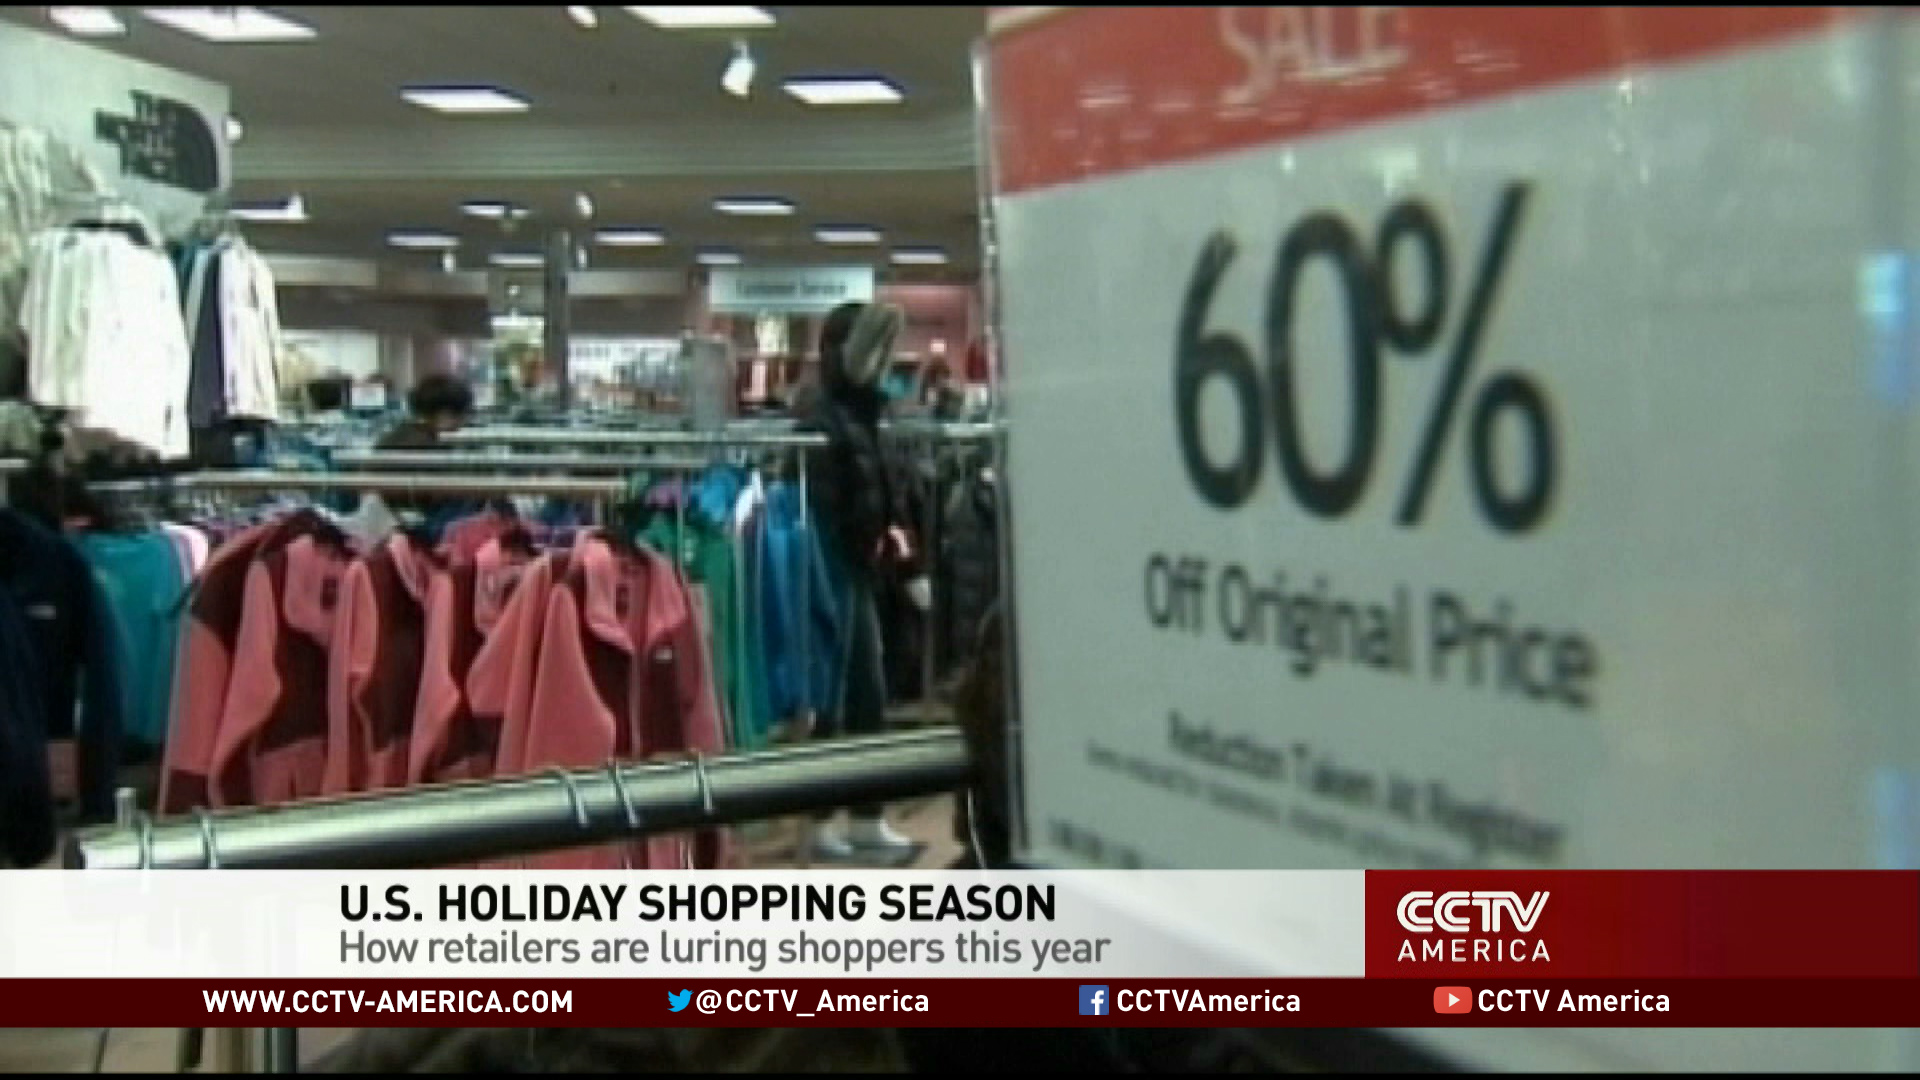 Retail expert Burt Flickinger discusses holiday shopping season